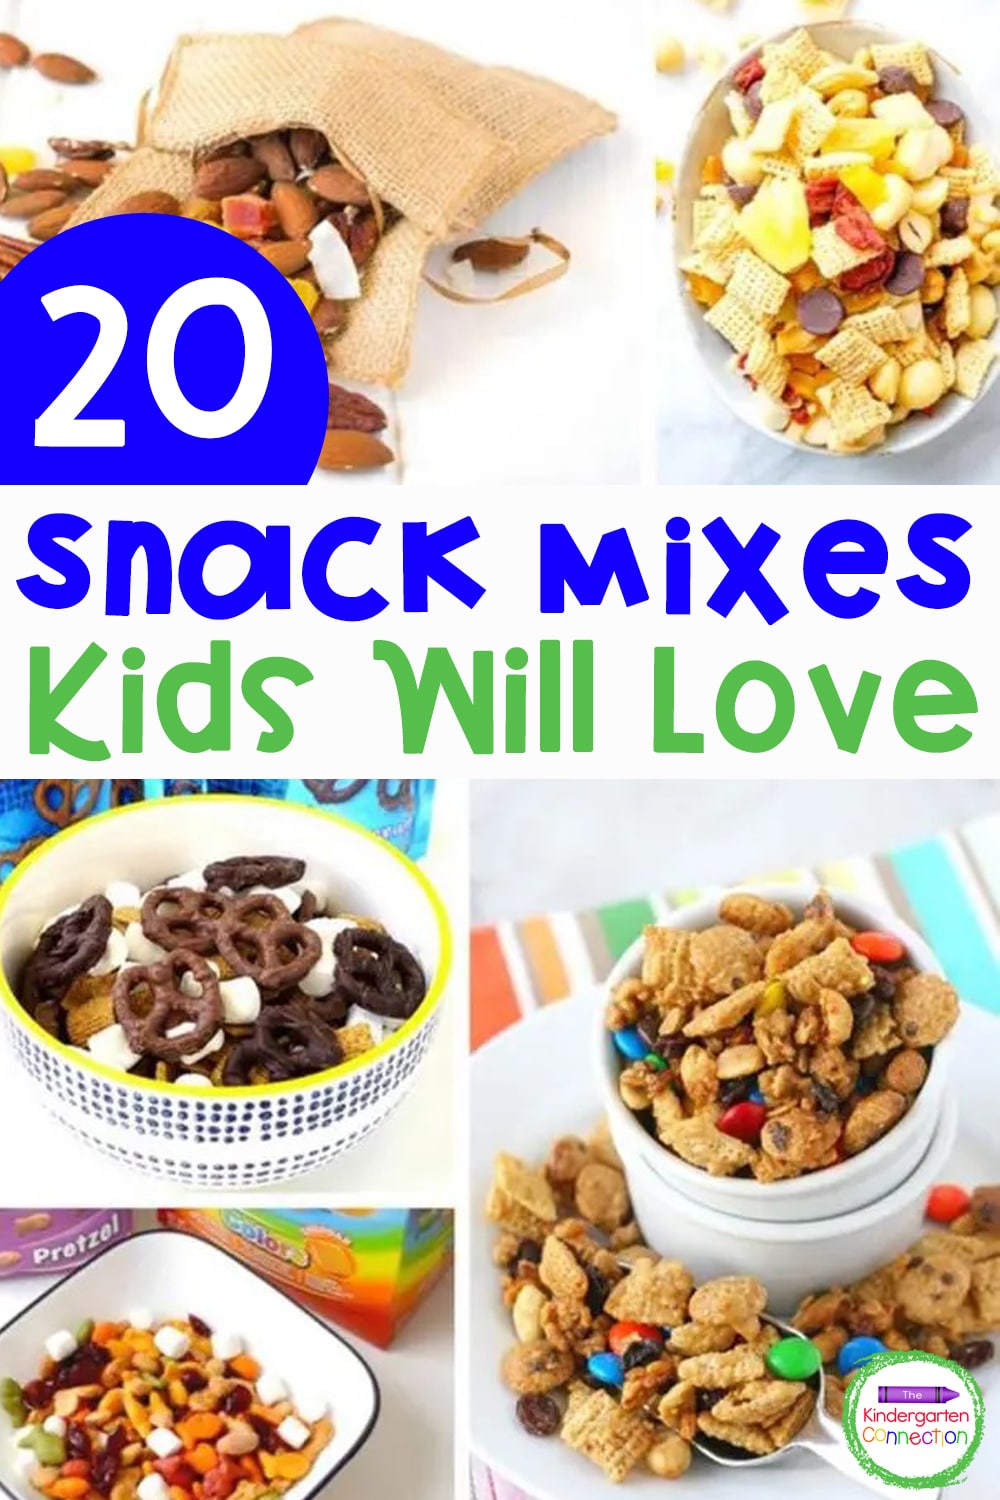 20 Snack Mixes Kids Will Love